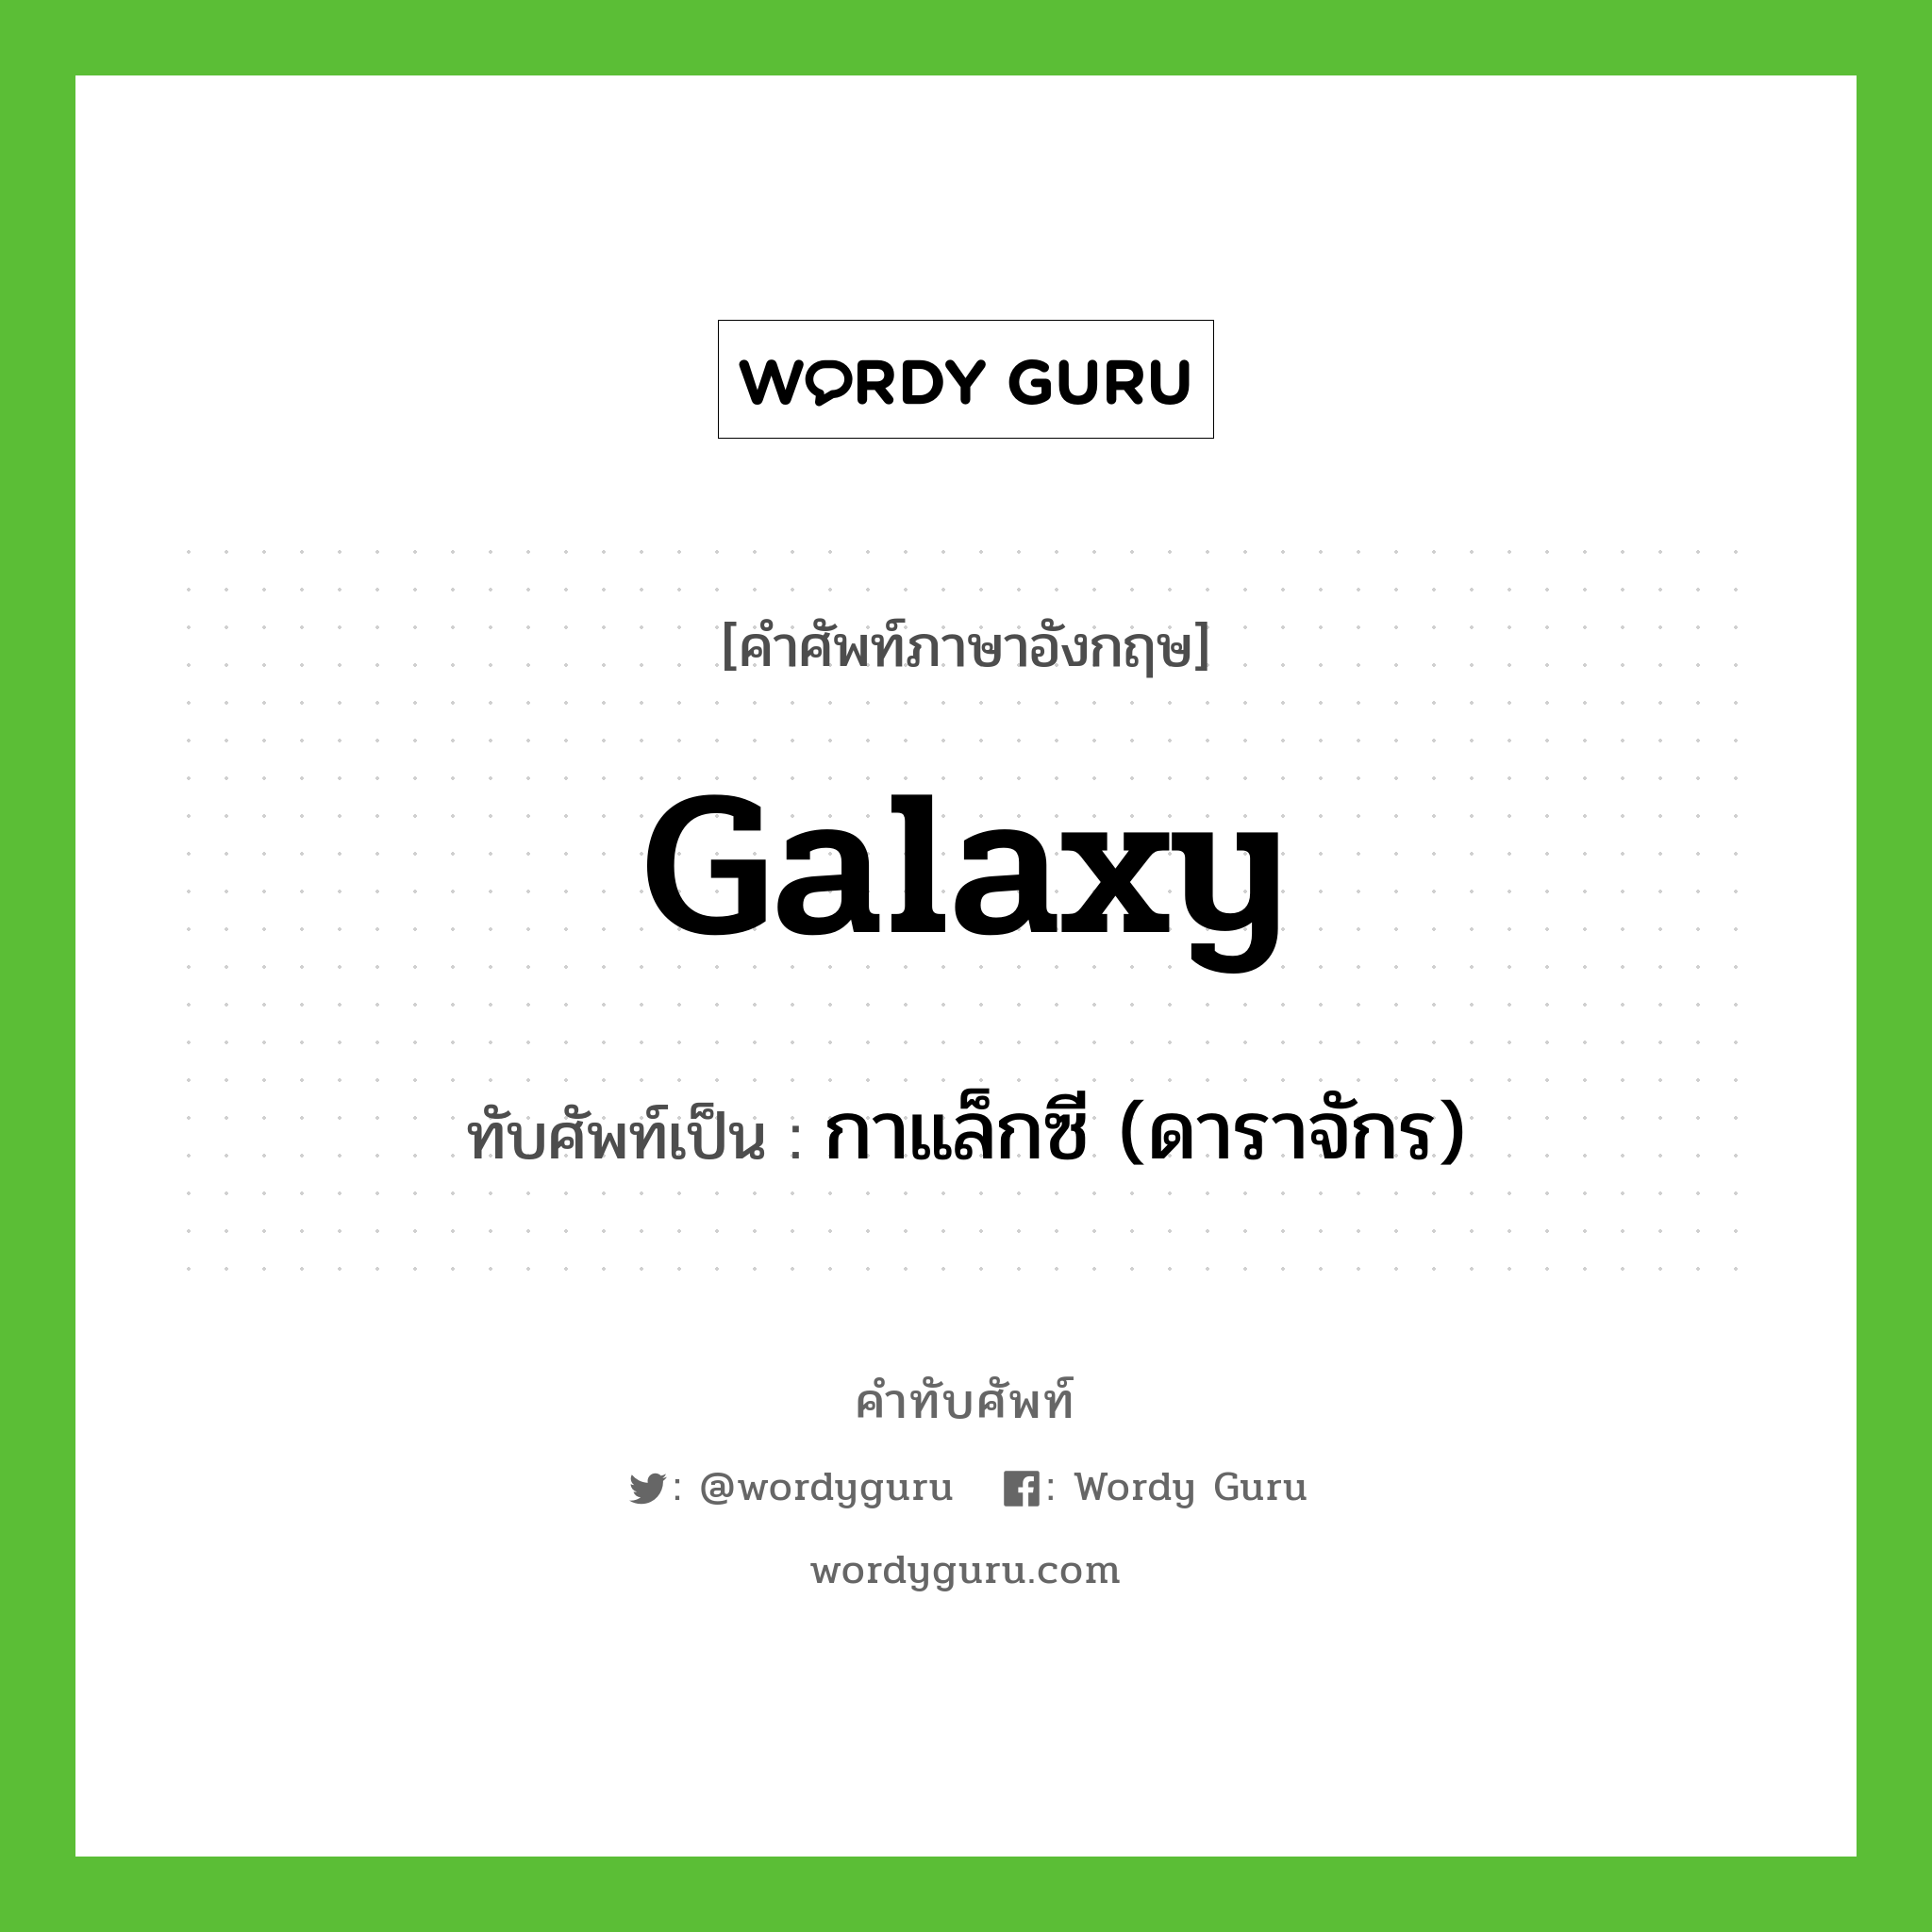 galaxy เขียนเป็นคำไทยว่าอะไร?, คำศัพท์ภาษาอังกฤษ galaxy ทับศัพท์เป็น กาแล็กซี (ดาราจักร)